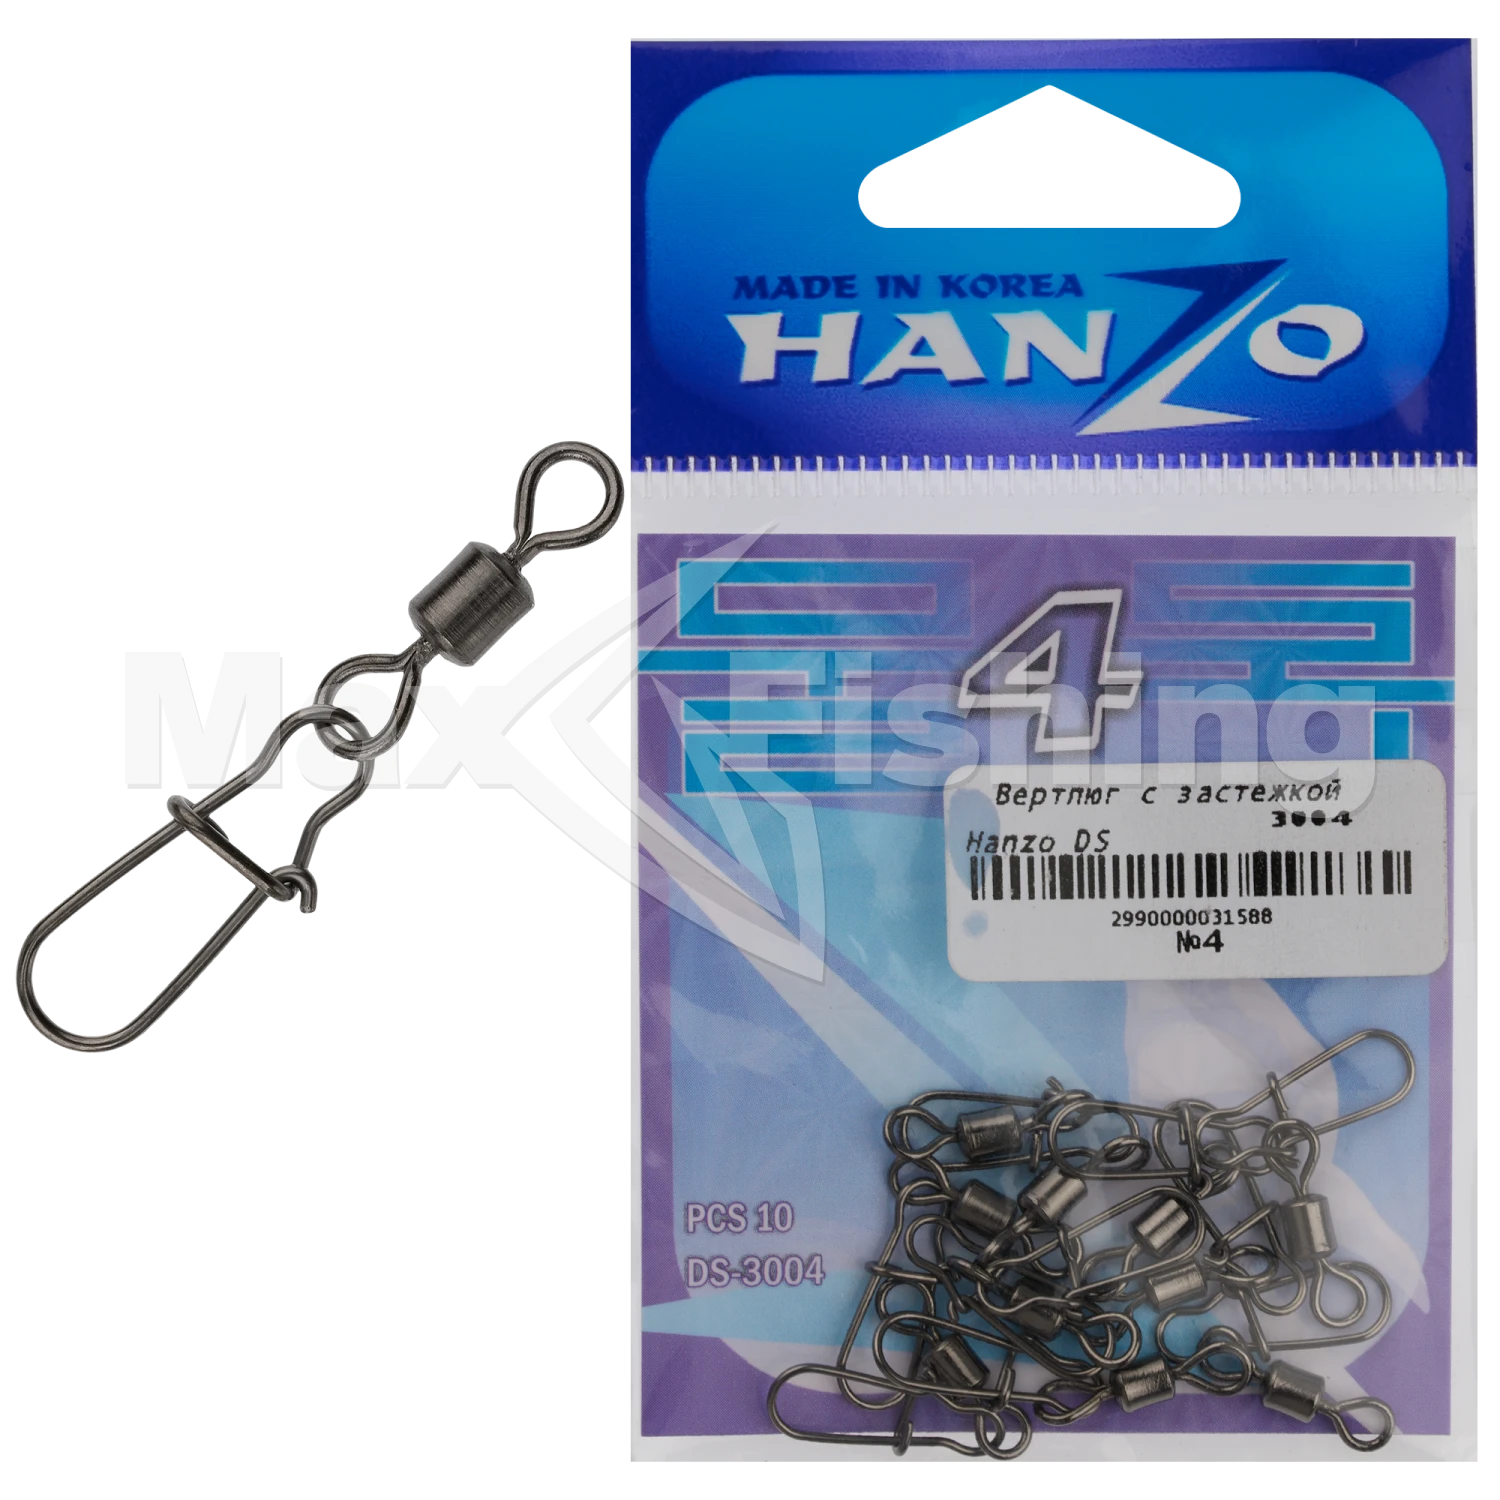 Вертлюг с застежкой Hanzo DS 3004 #4